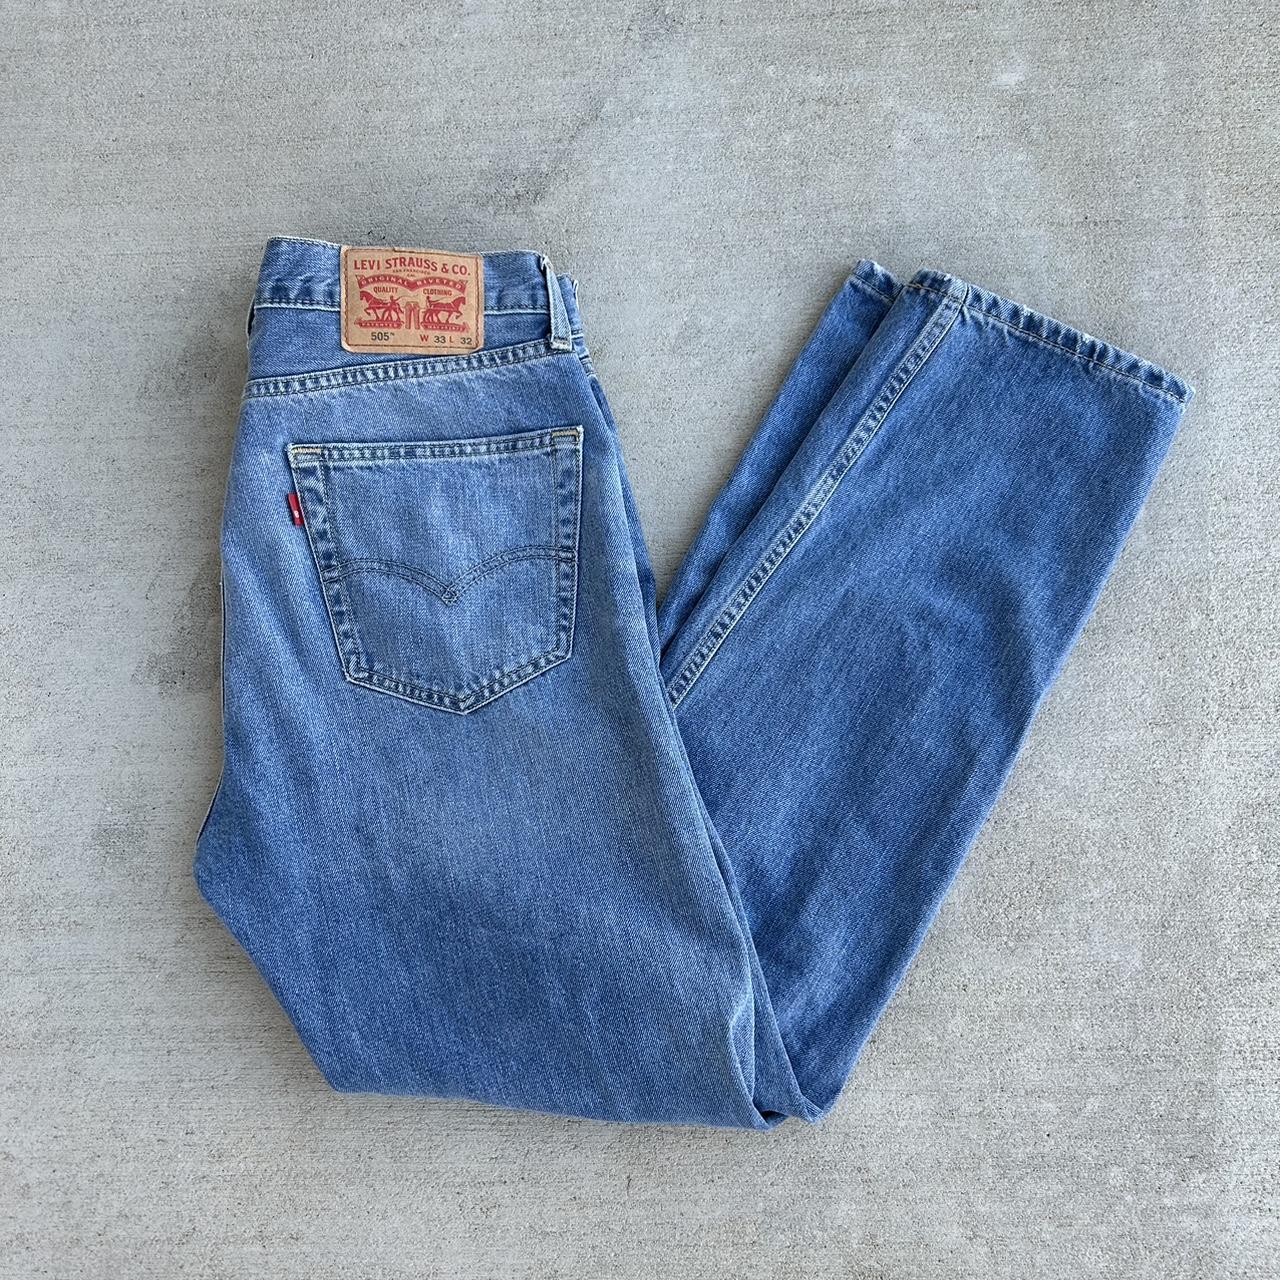 levis 505 medium wash denim blue jeans - great... - Depop